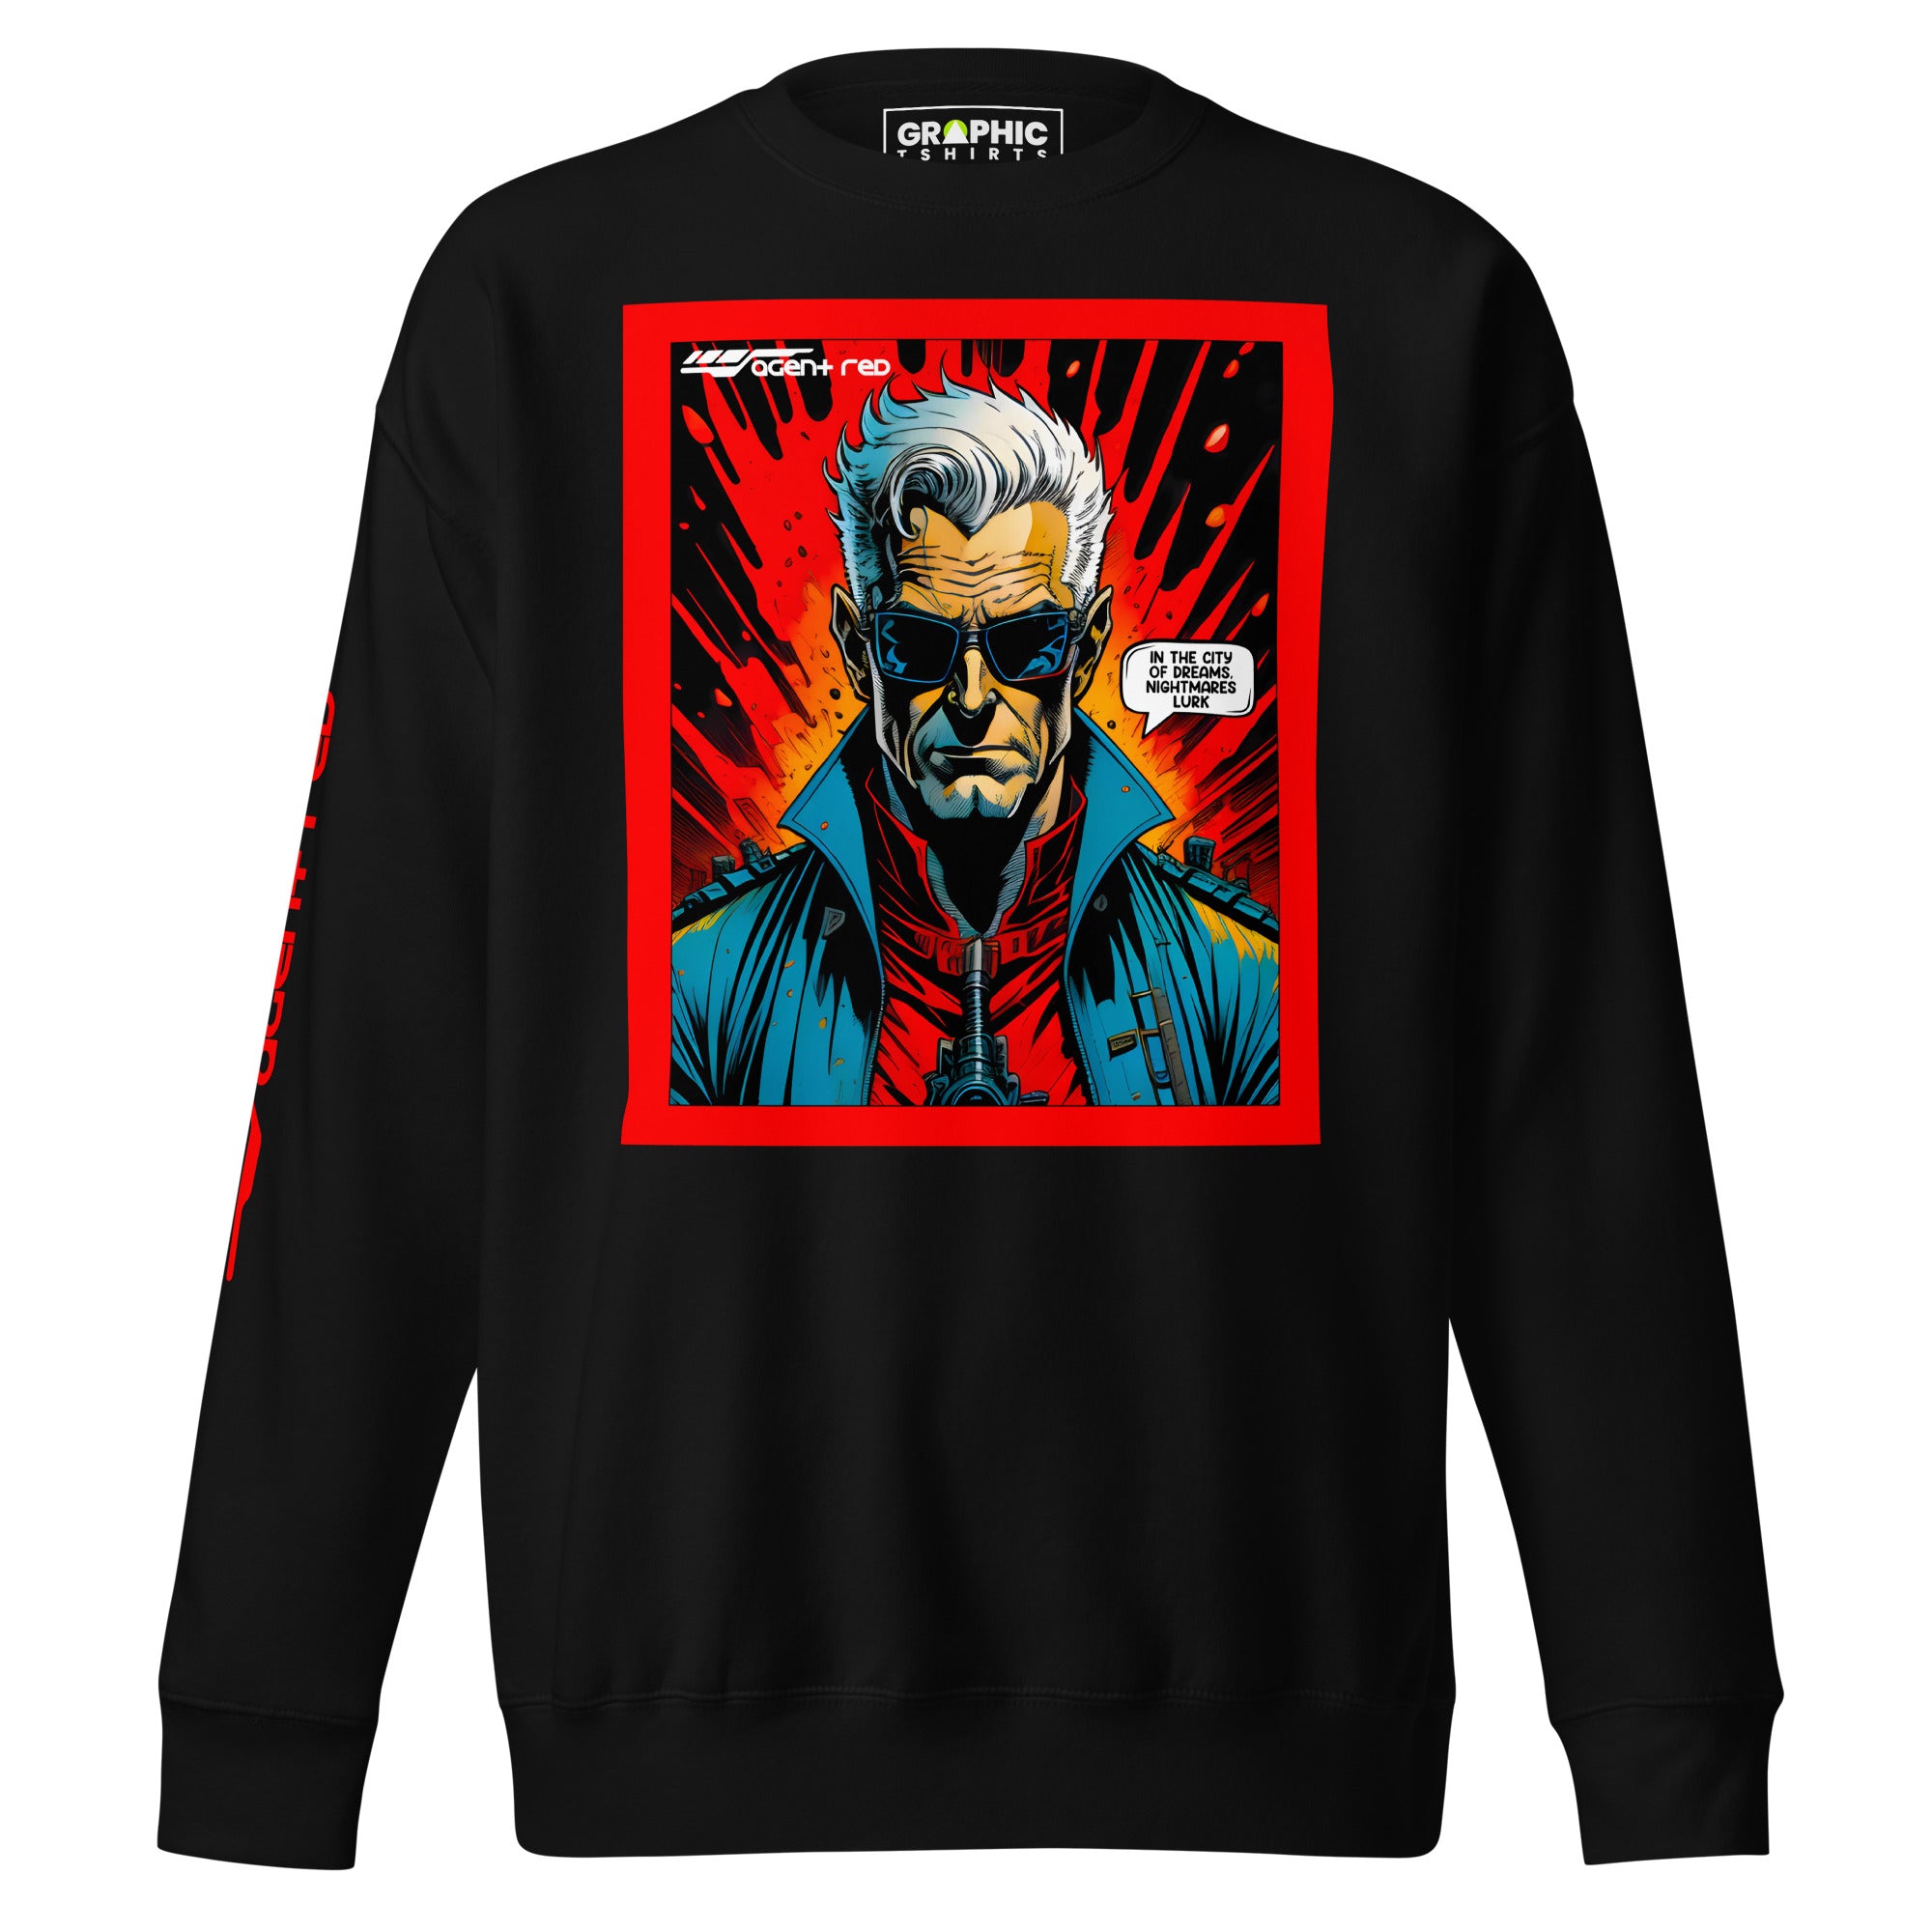 Unisex Premium Sweatshirt - Agent Red Cyberpunk Series v.54